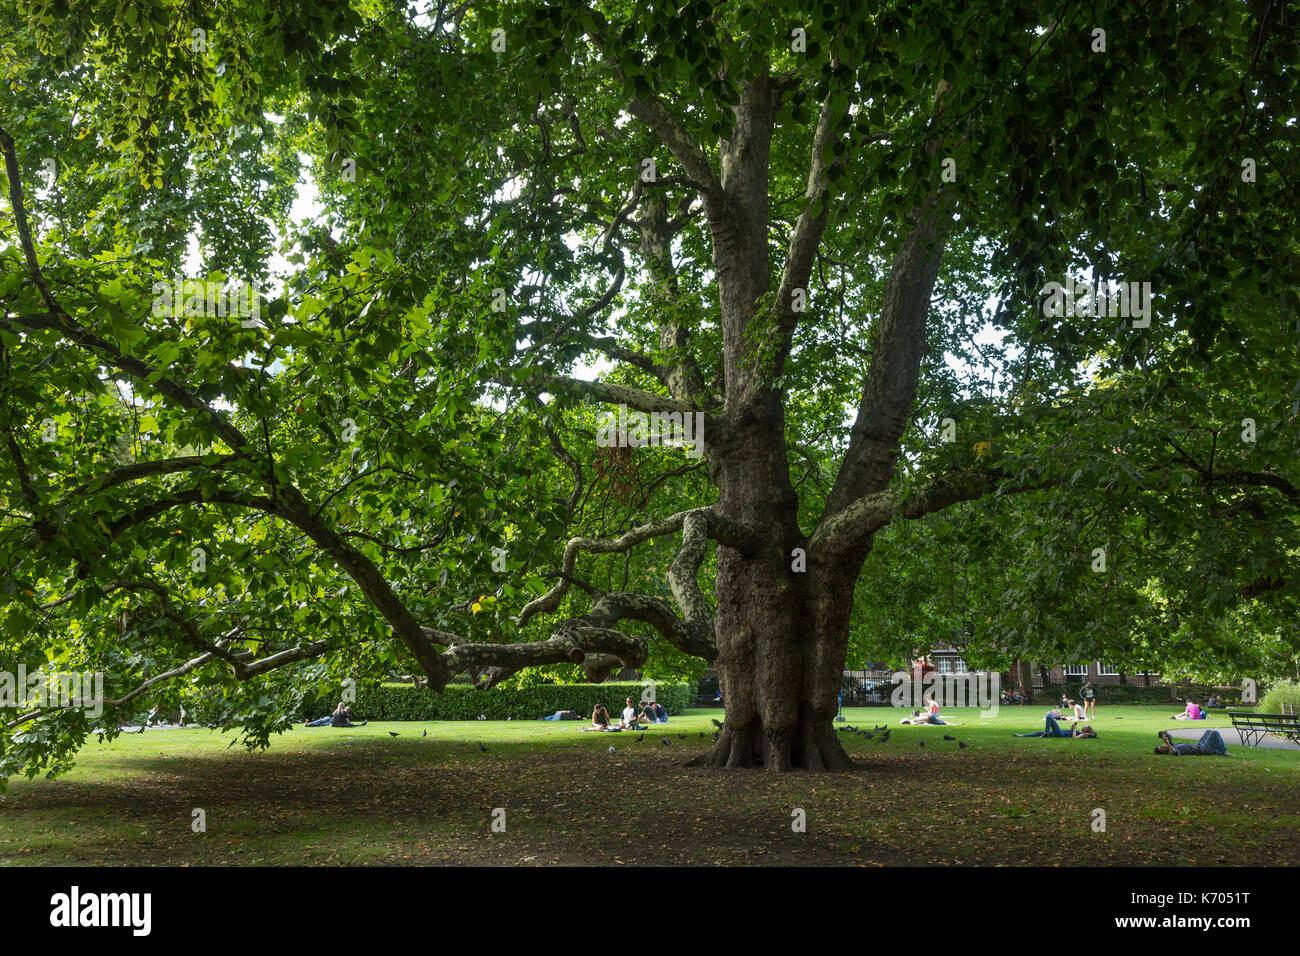 London Plane Tree, Brunswick Square, London, UK Stock Photo